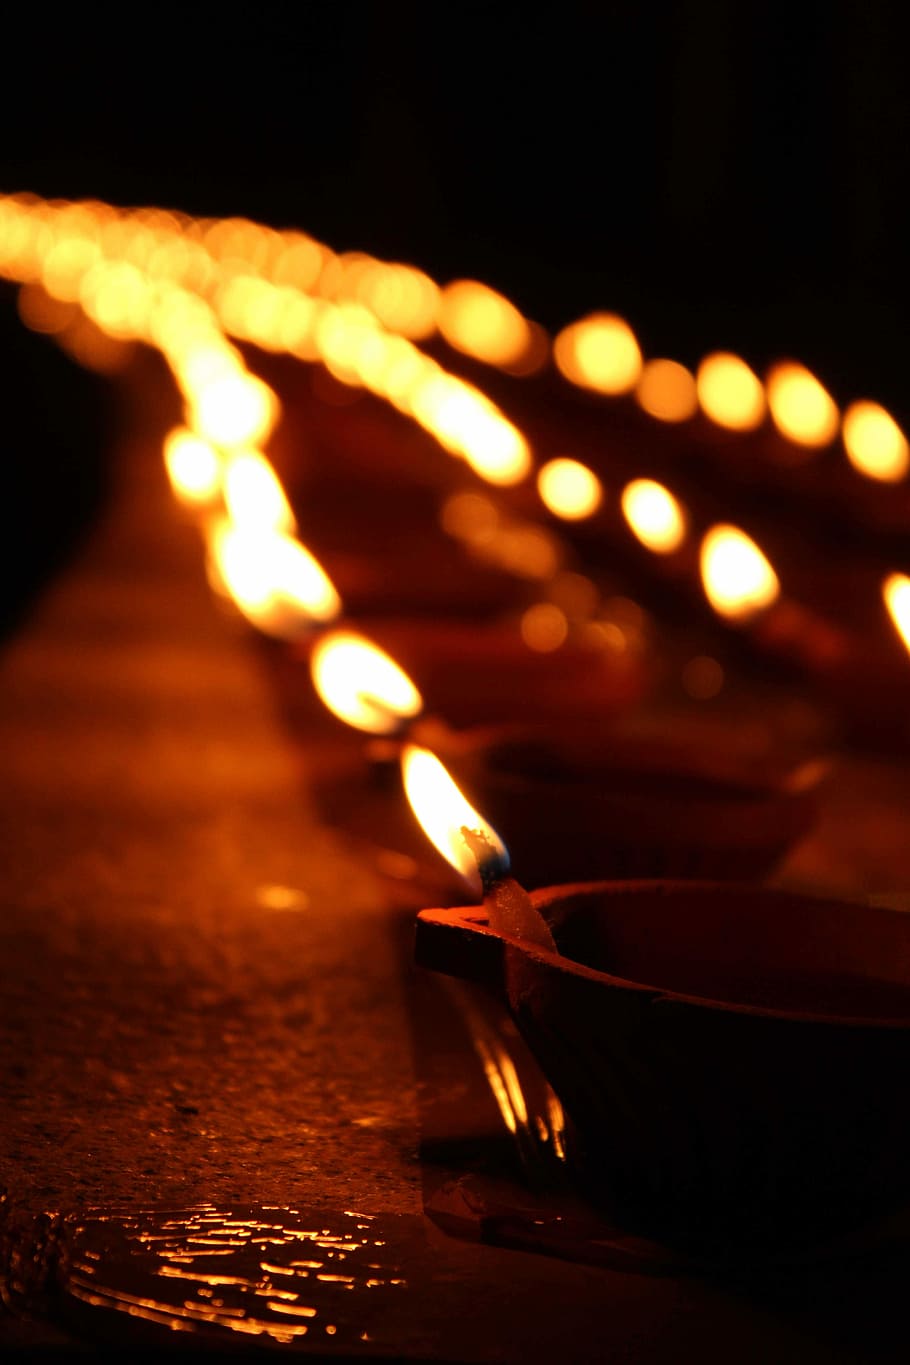 seletiva, foto de foco, iluminado, velas, noite, diyas, diwali, deepam, festival, lâmpada de óleo